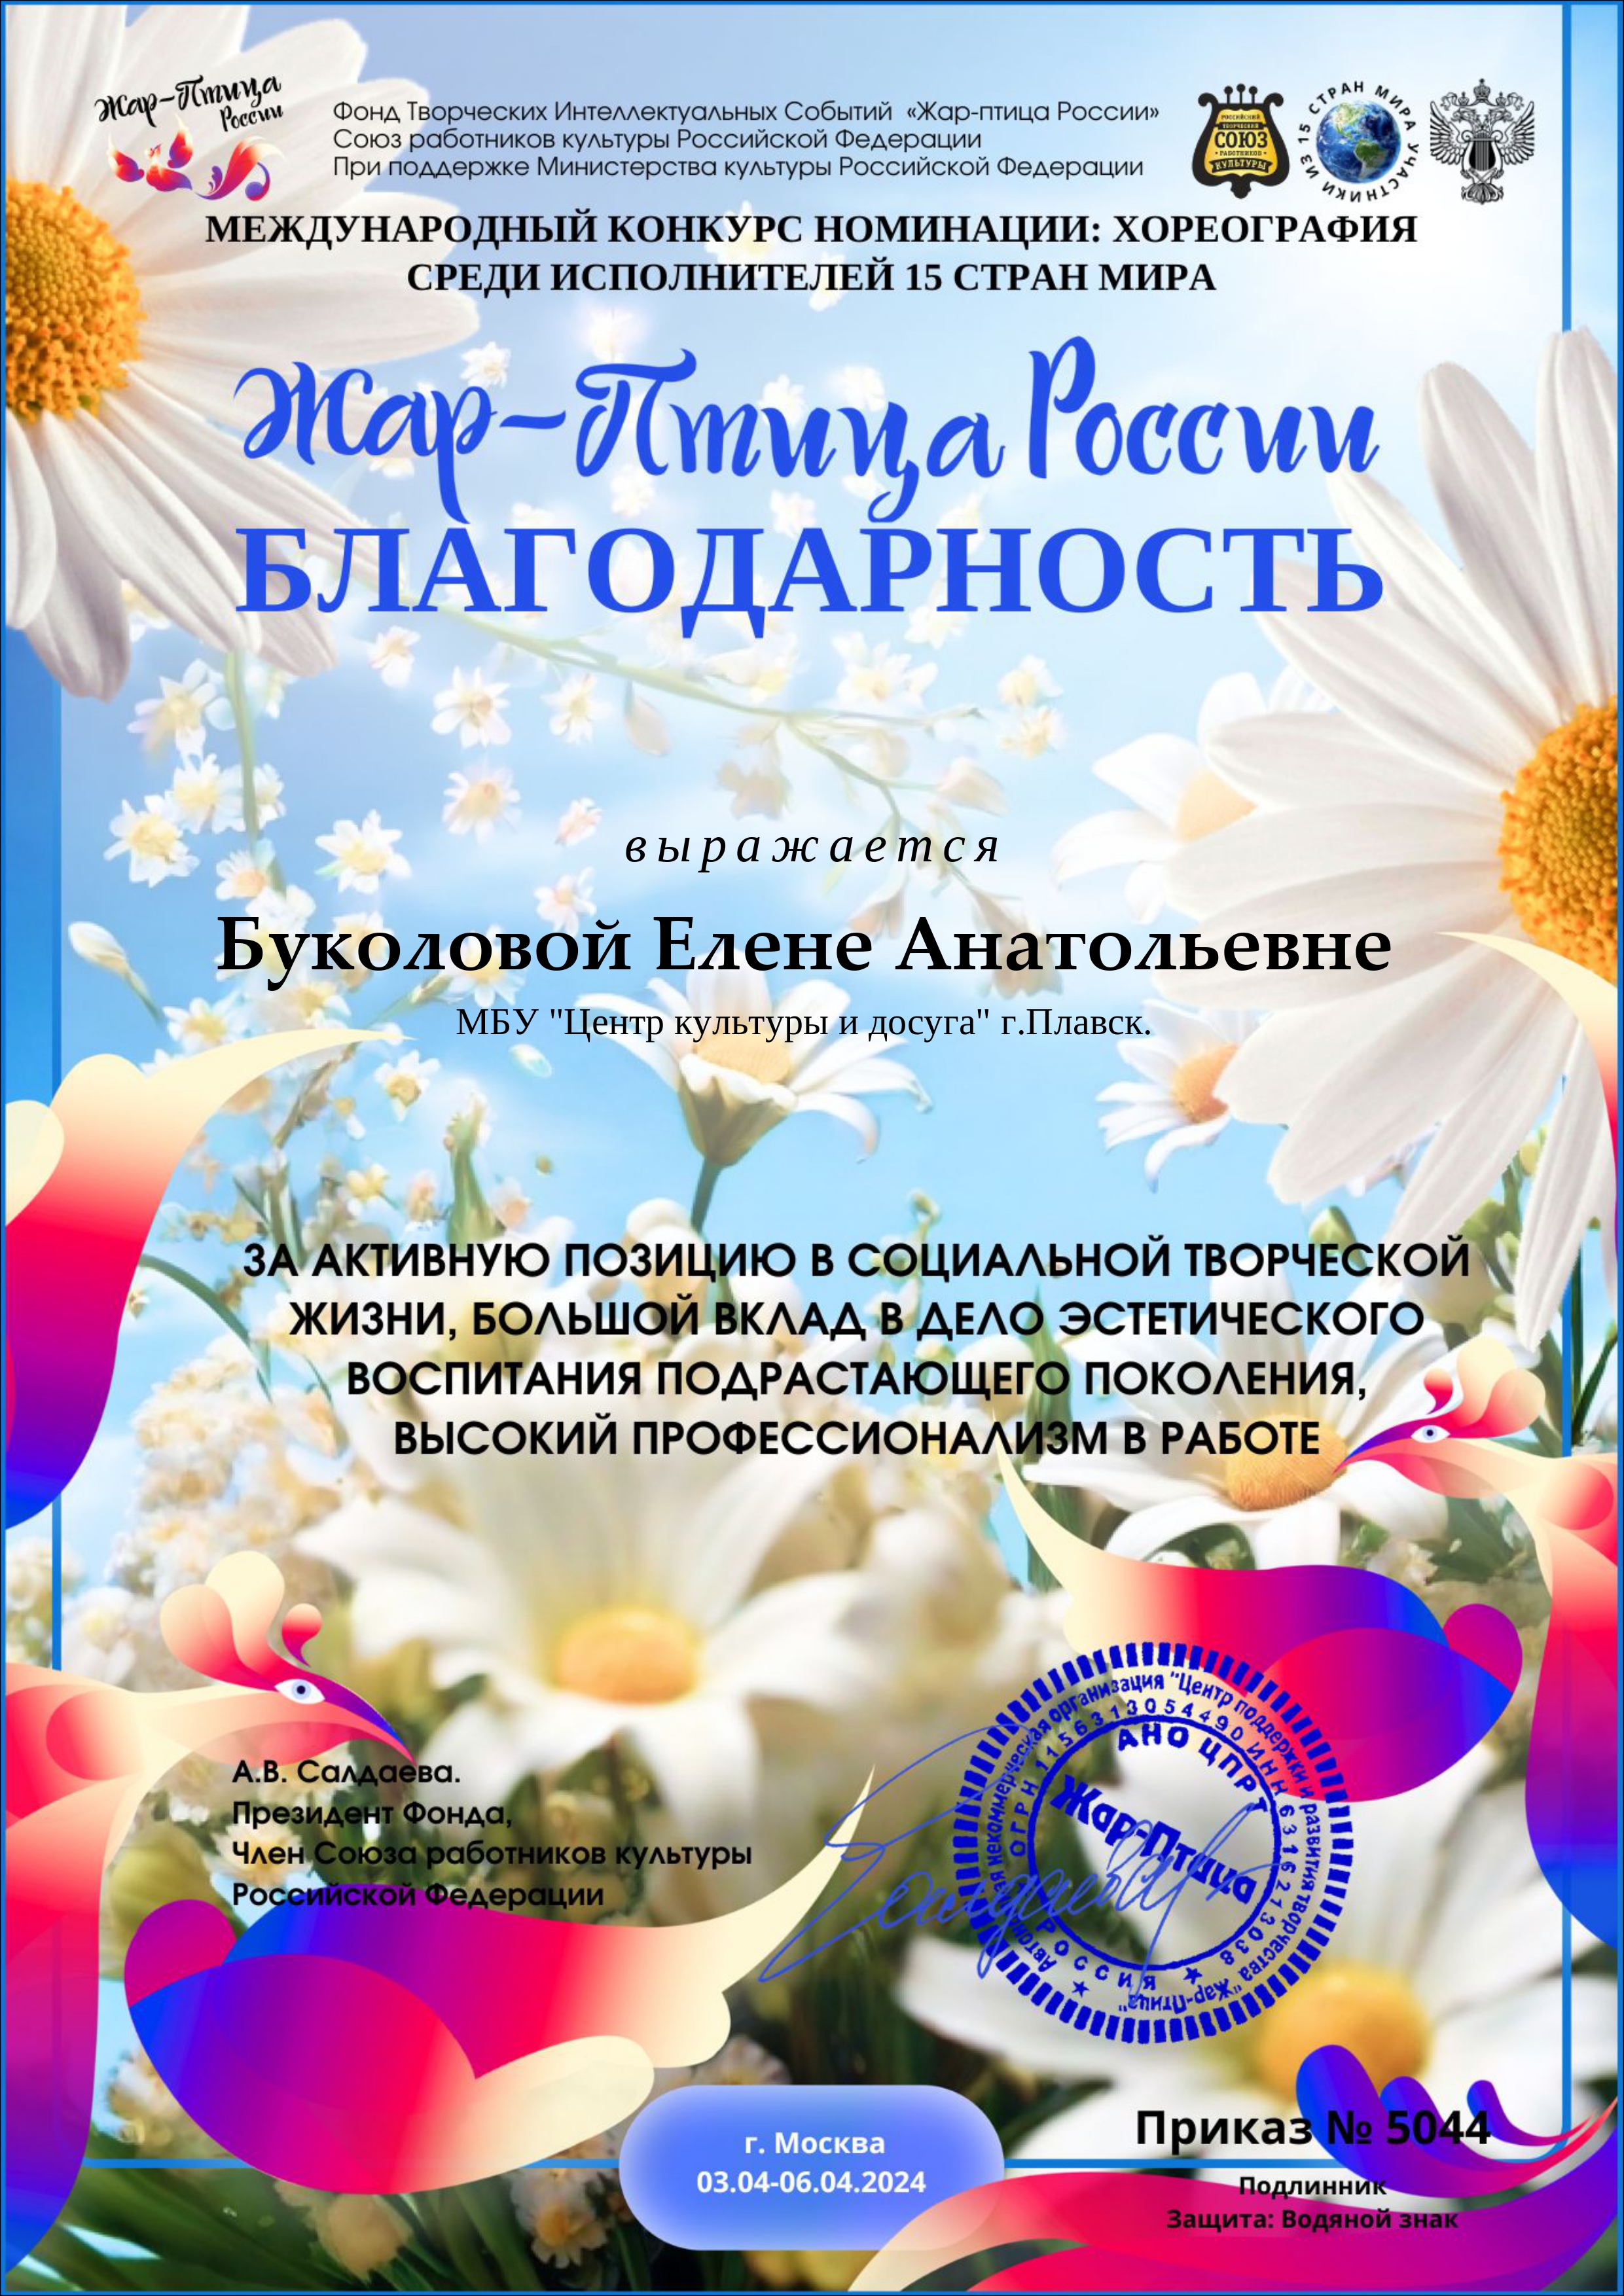 bukolovoj_elene_anatolevne_46_page-0001.jpg